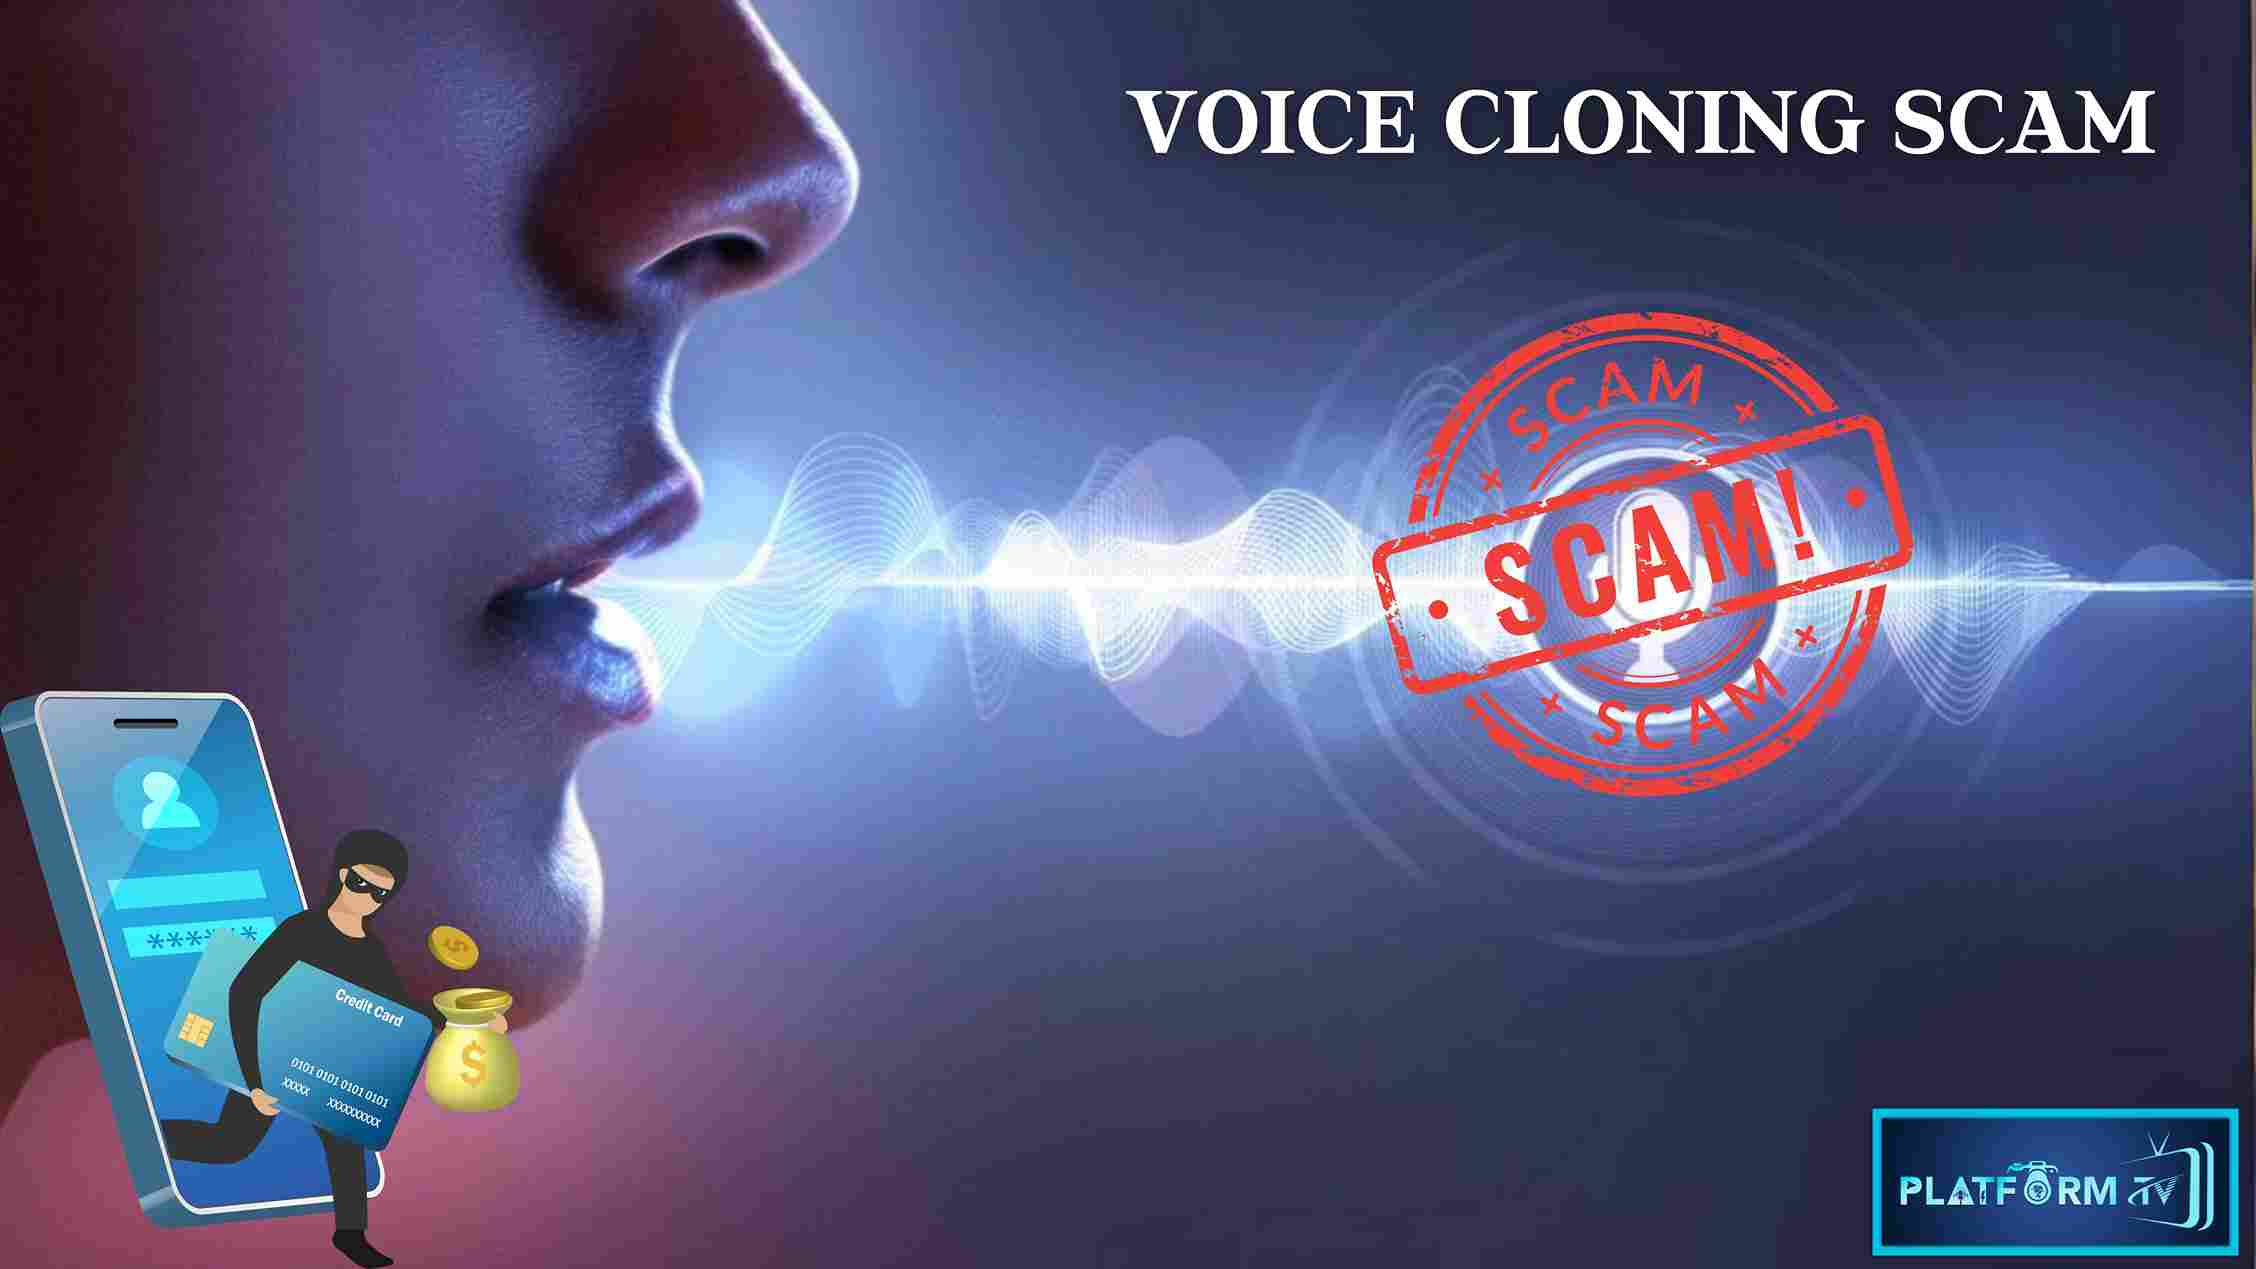 Voice Cloning Scam - Platform Tamil